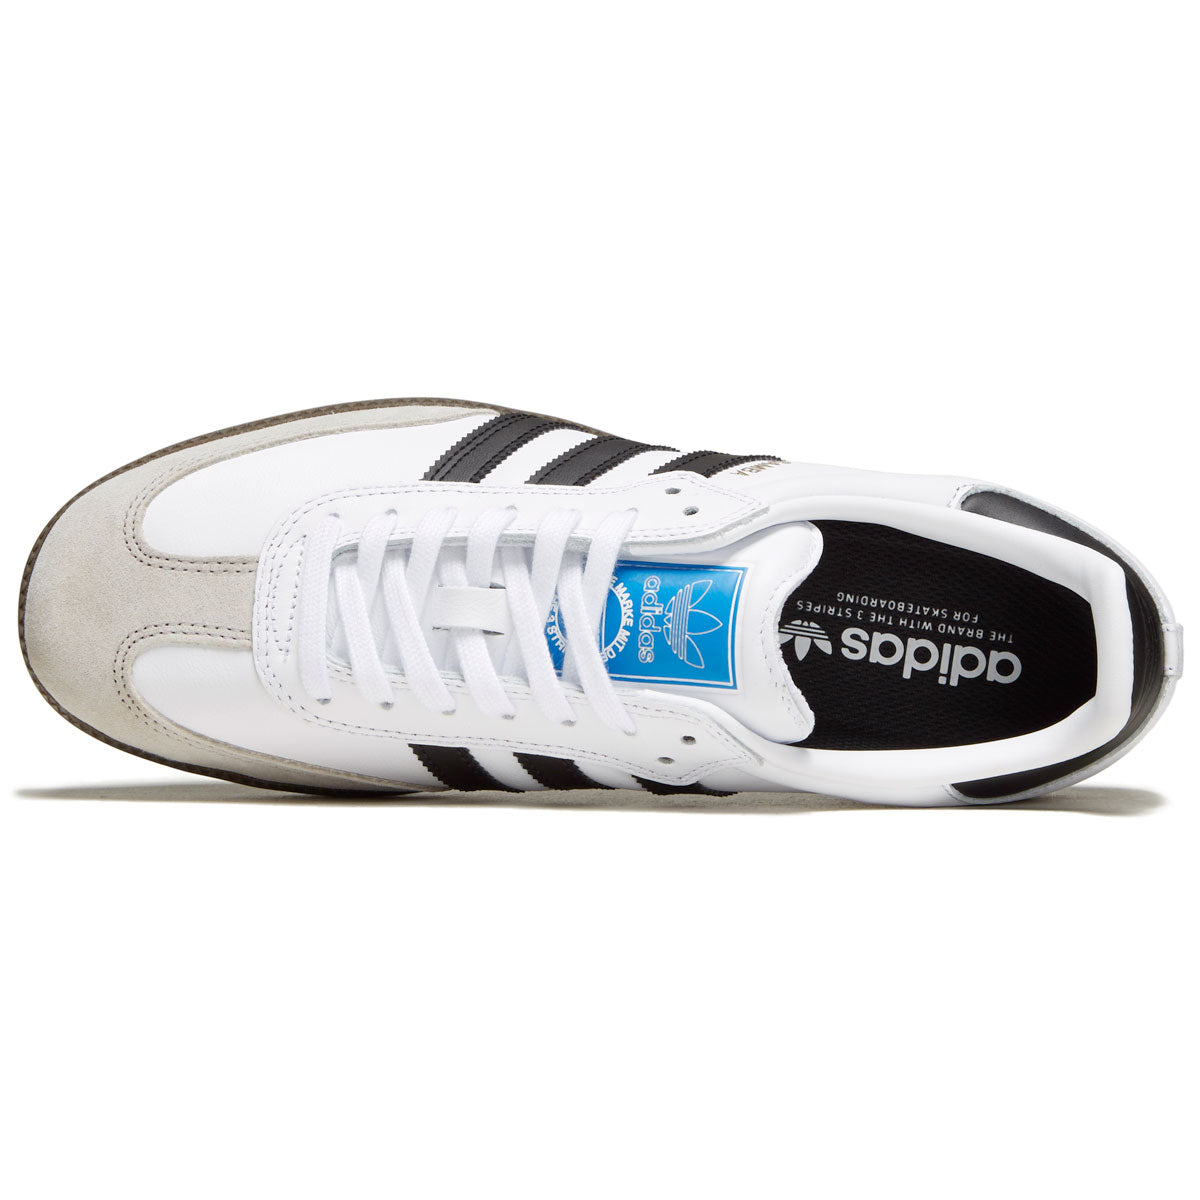 Adidas Samba Adv Shoes - White/Core Black/Gum image 3